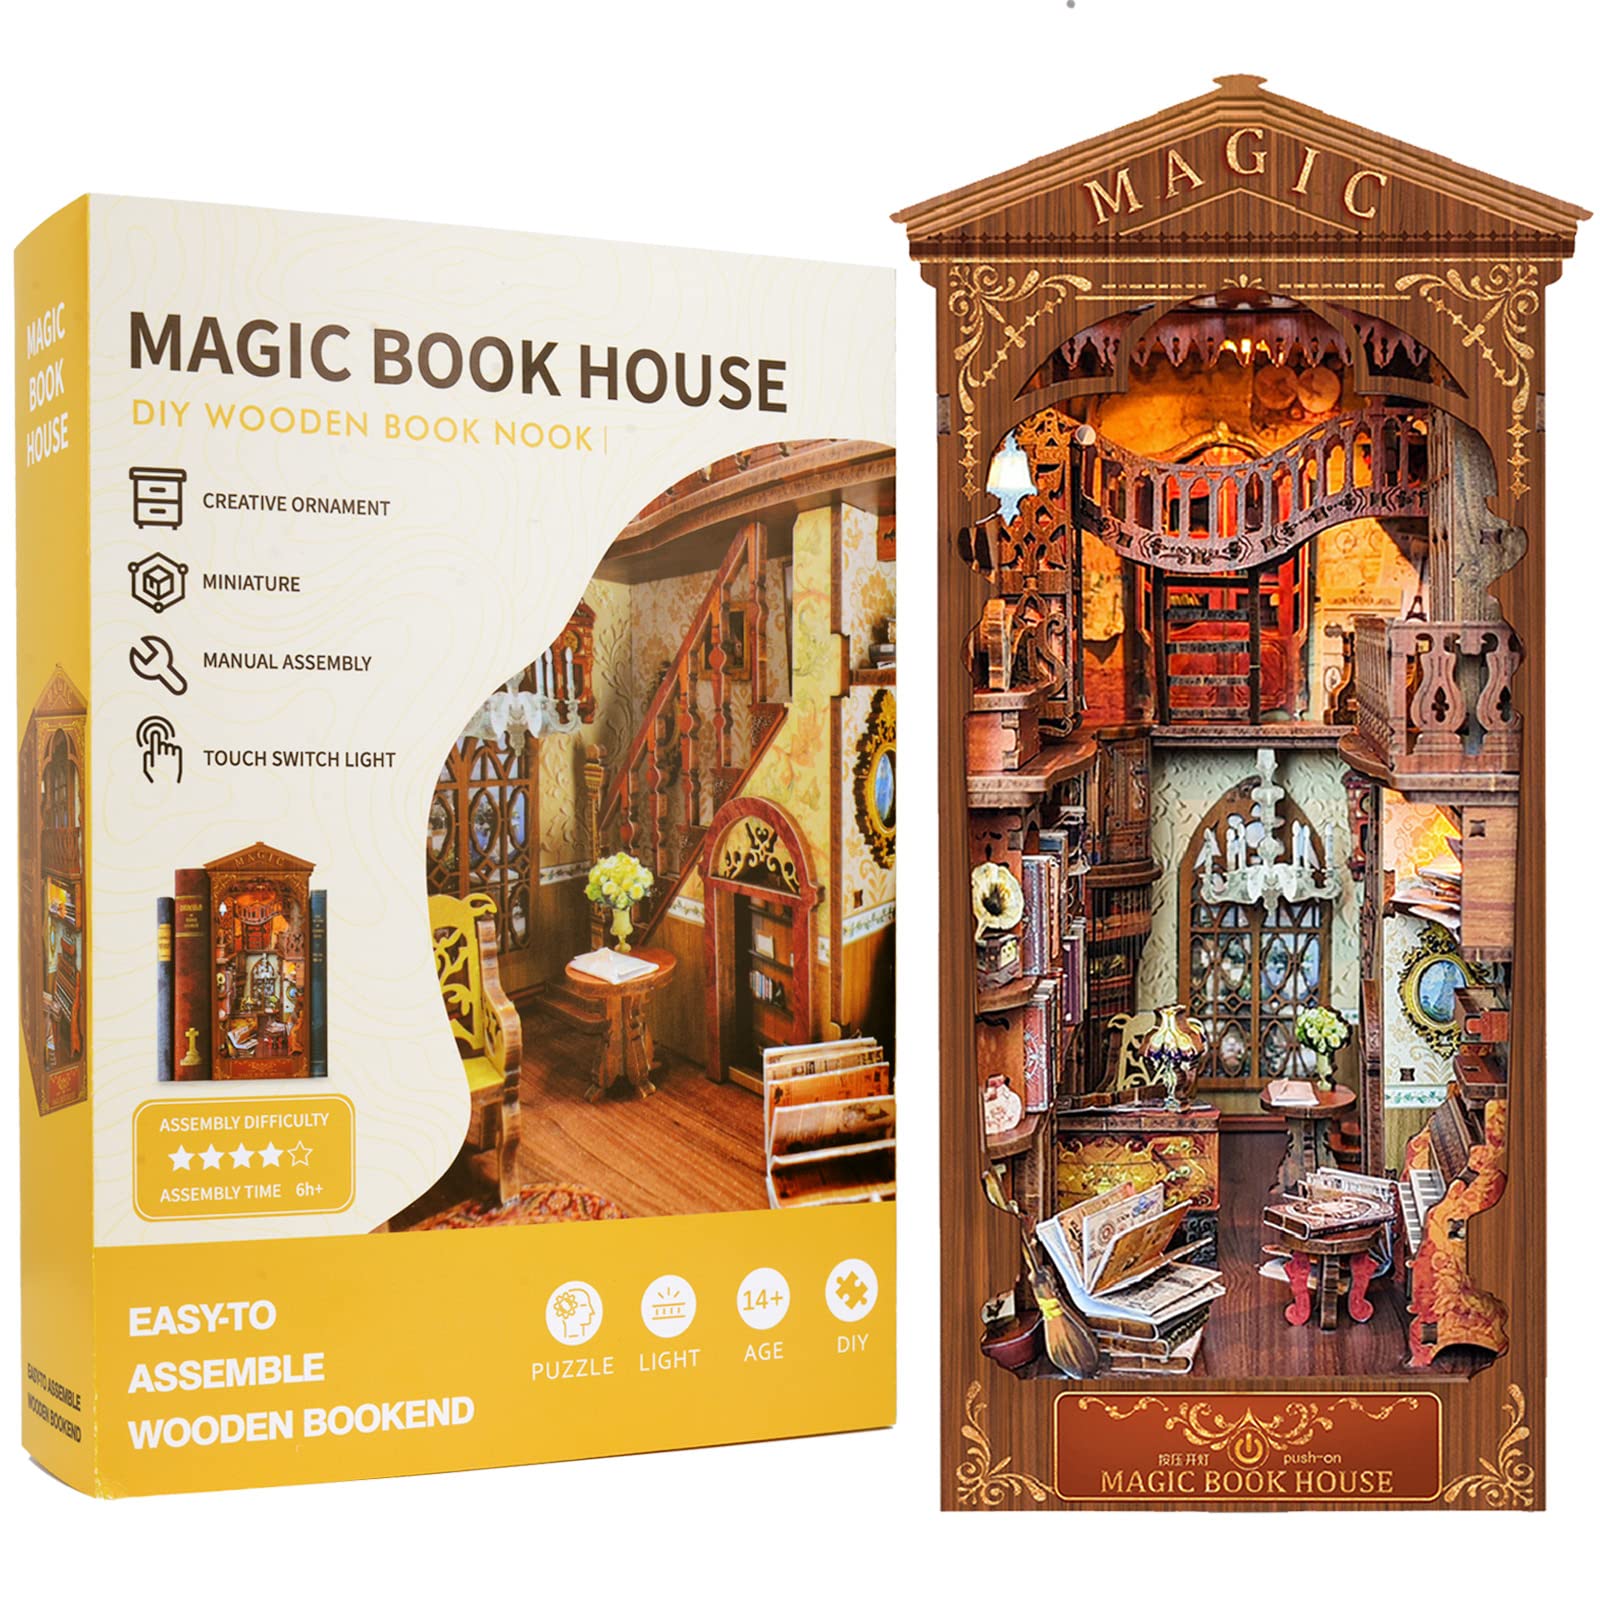  Magic Book House DIY Book Nook Kit-BOOK NOOK WORLD